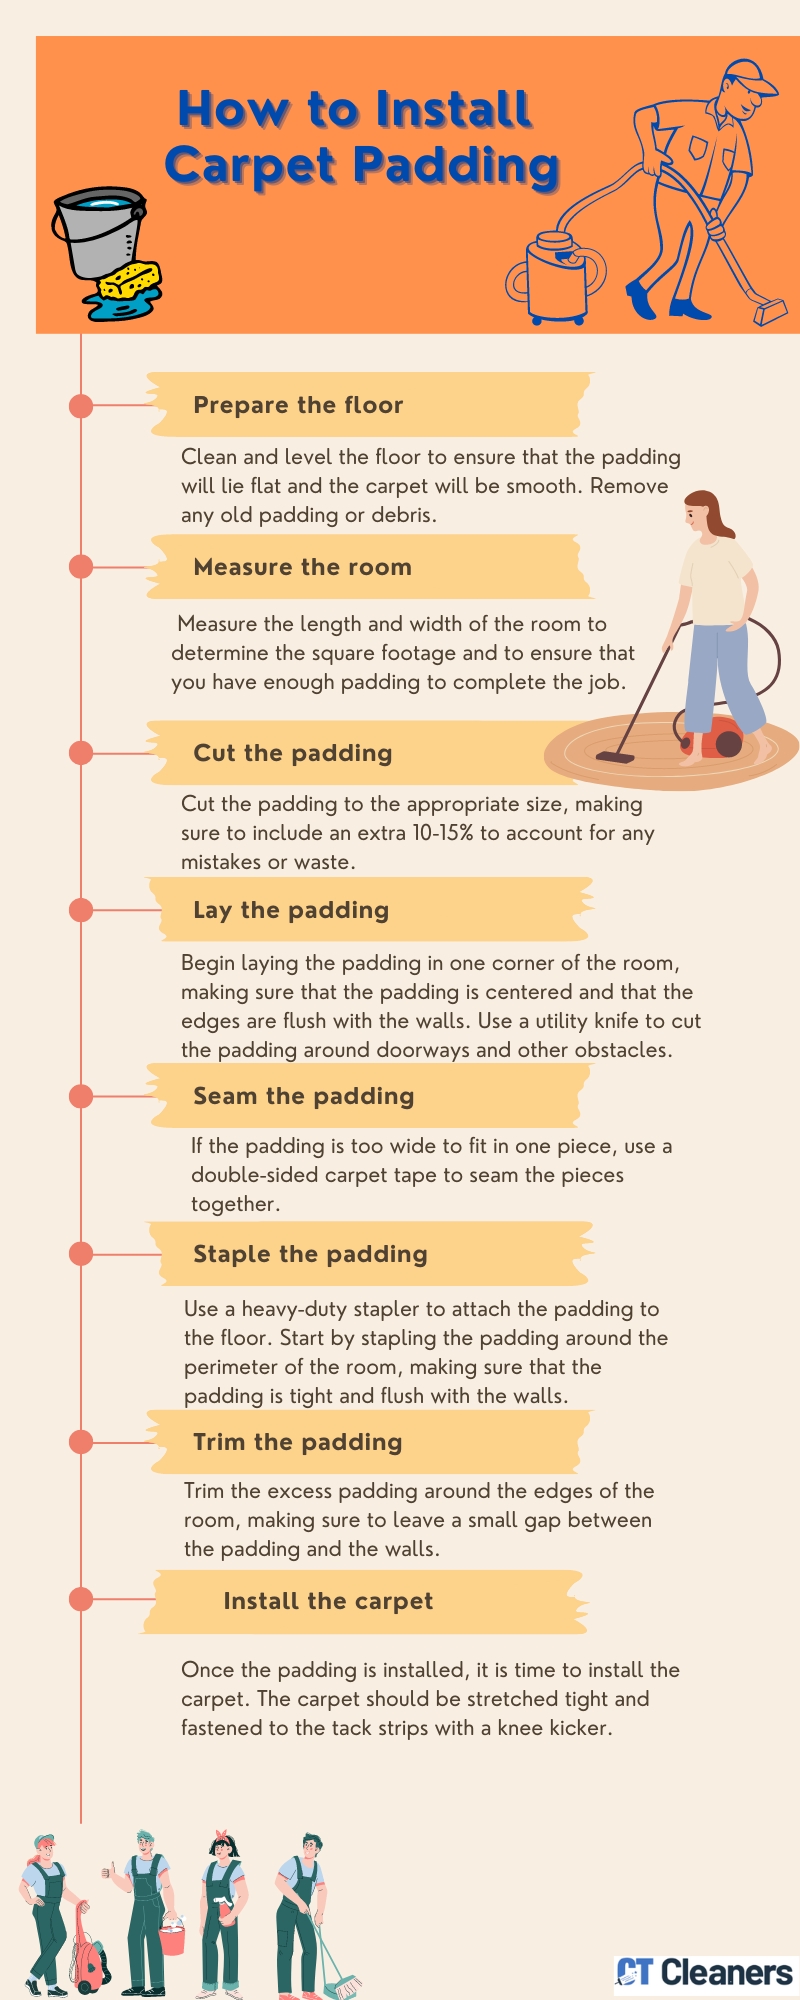 How to Install Carpet Padding